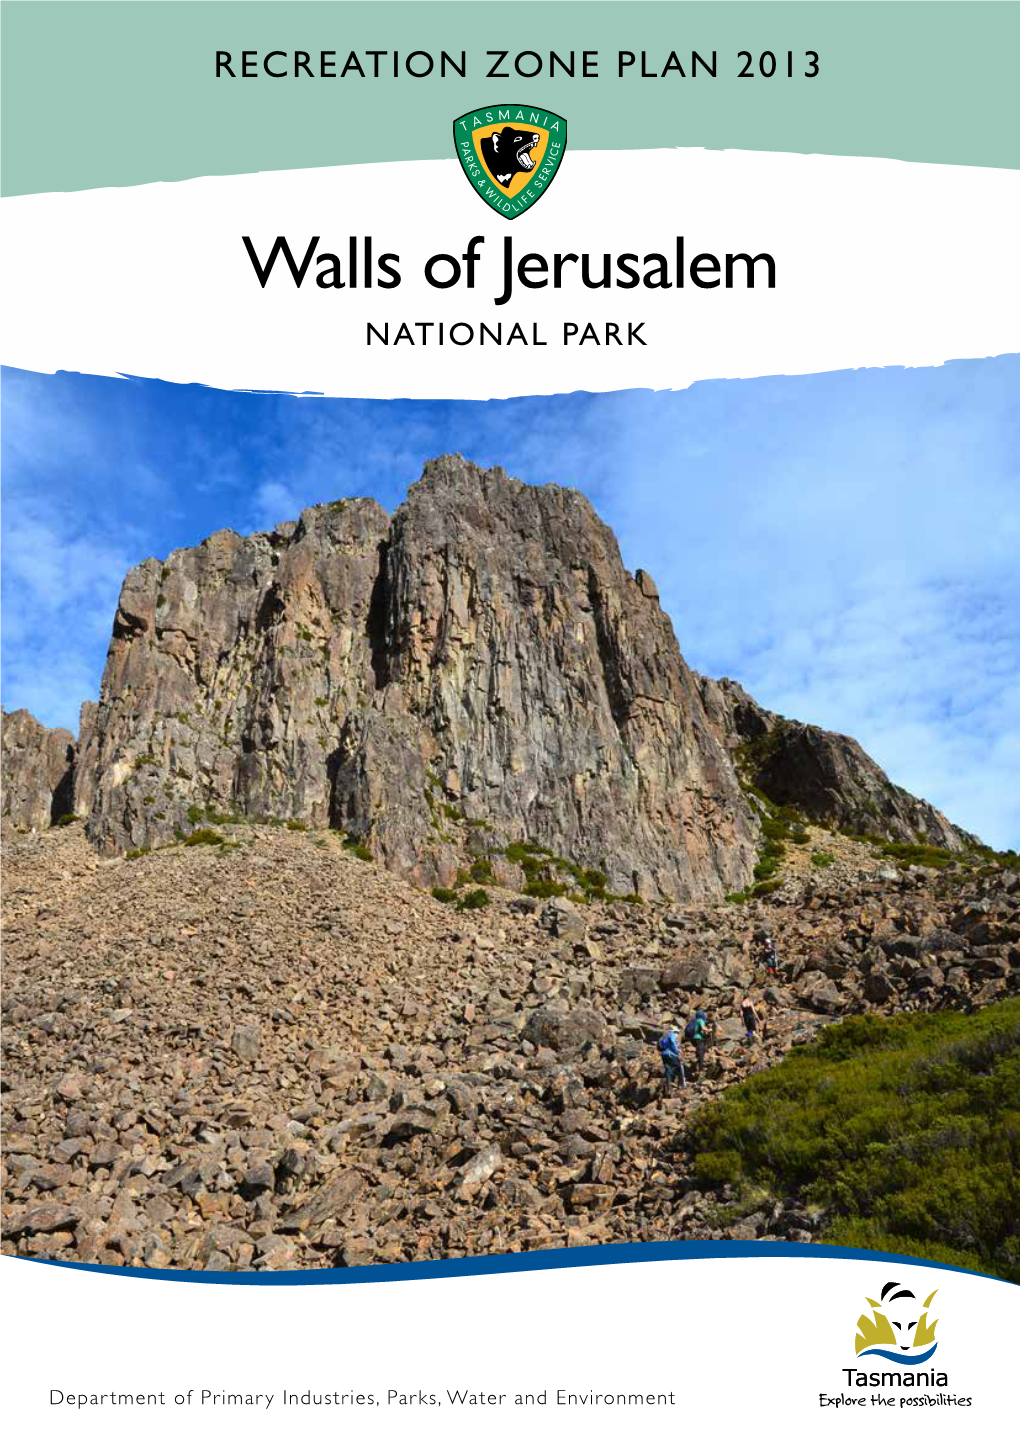 Walls of Jerusalem Recreation Zone Plan